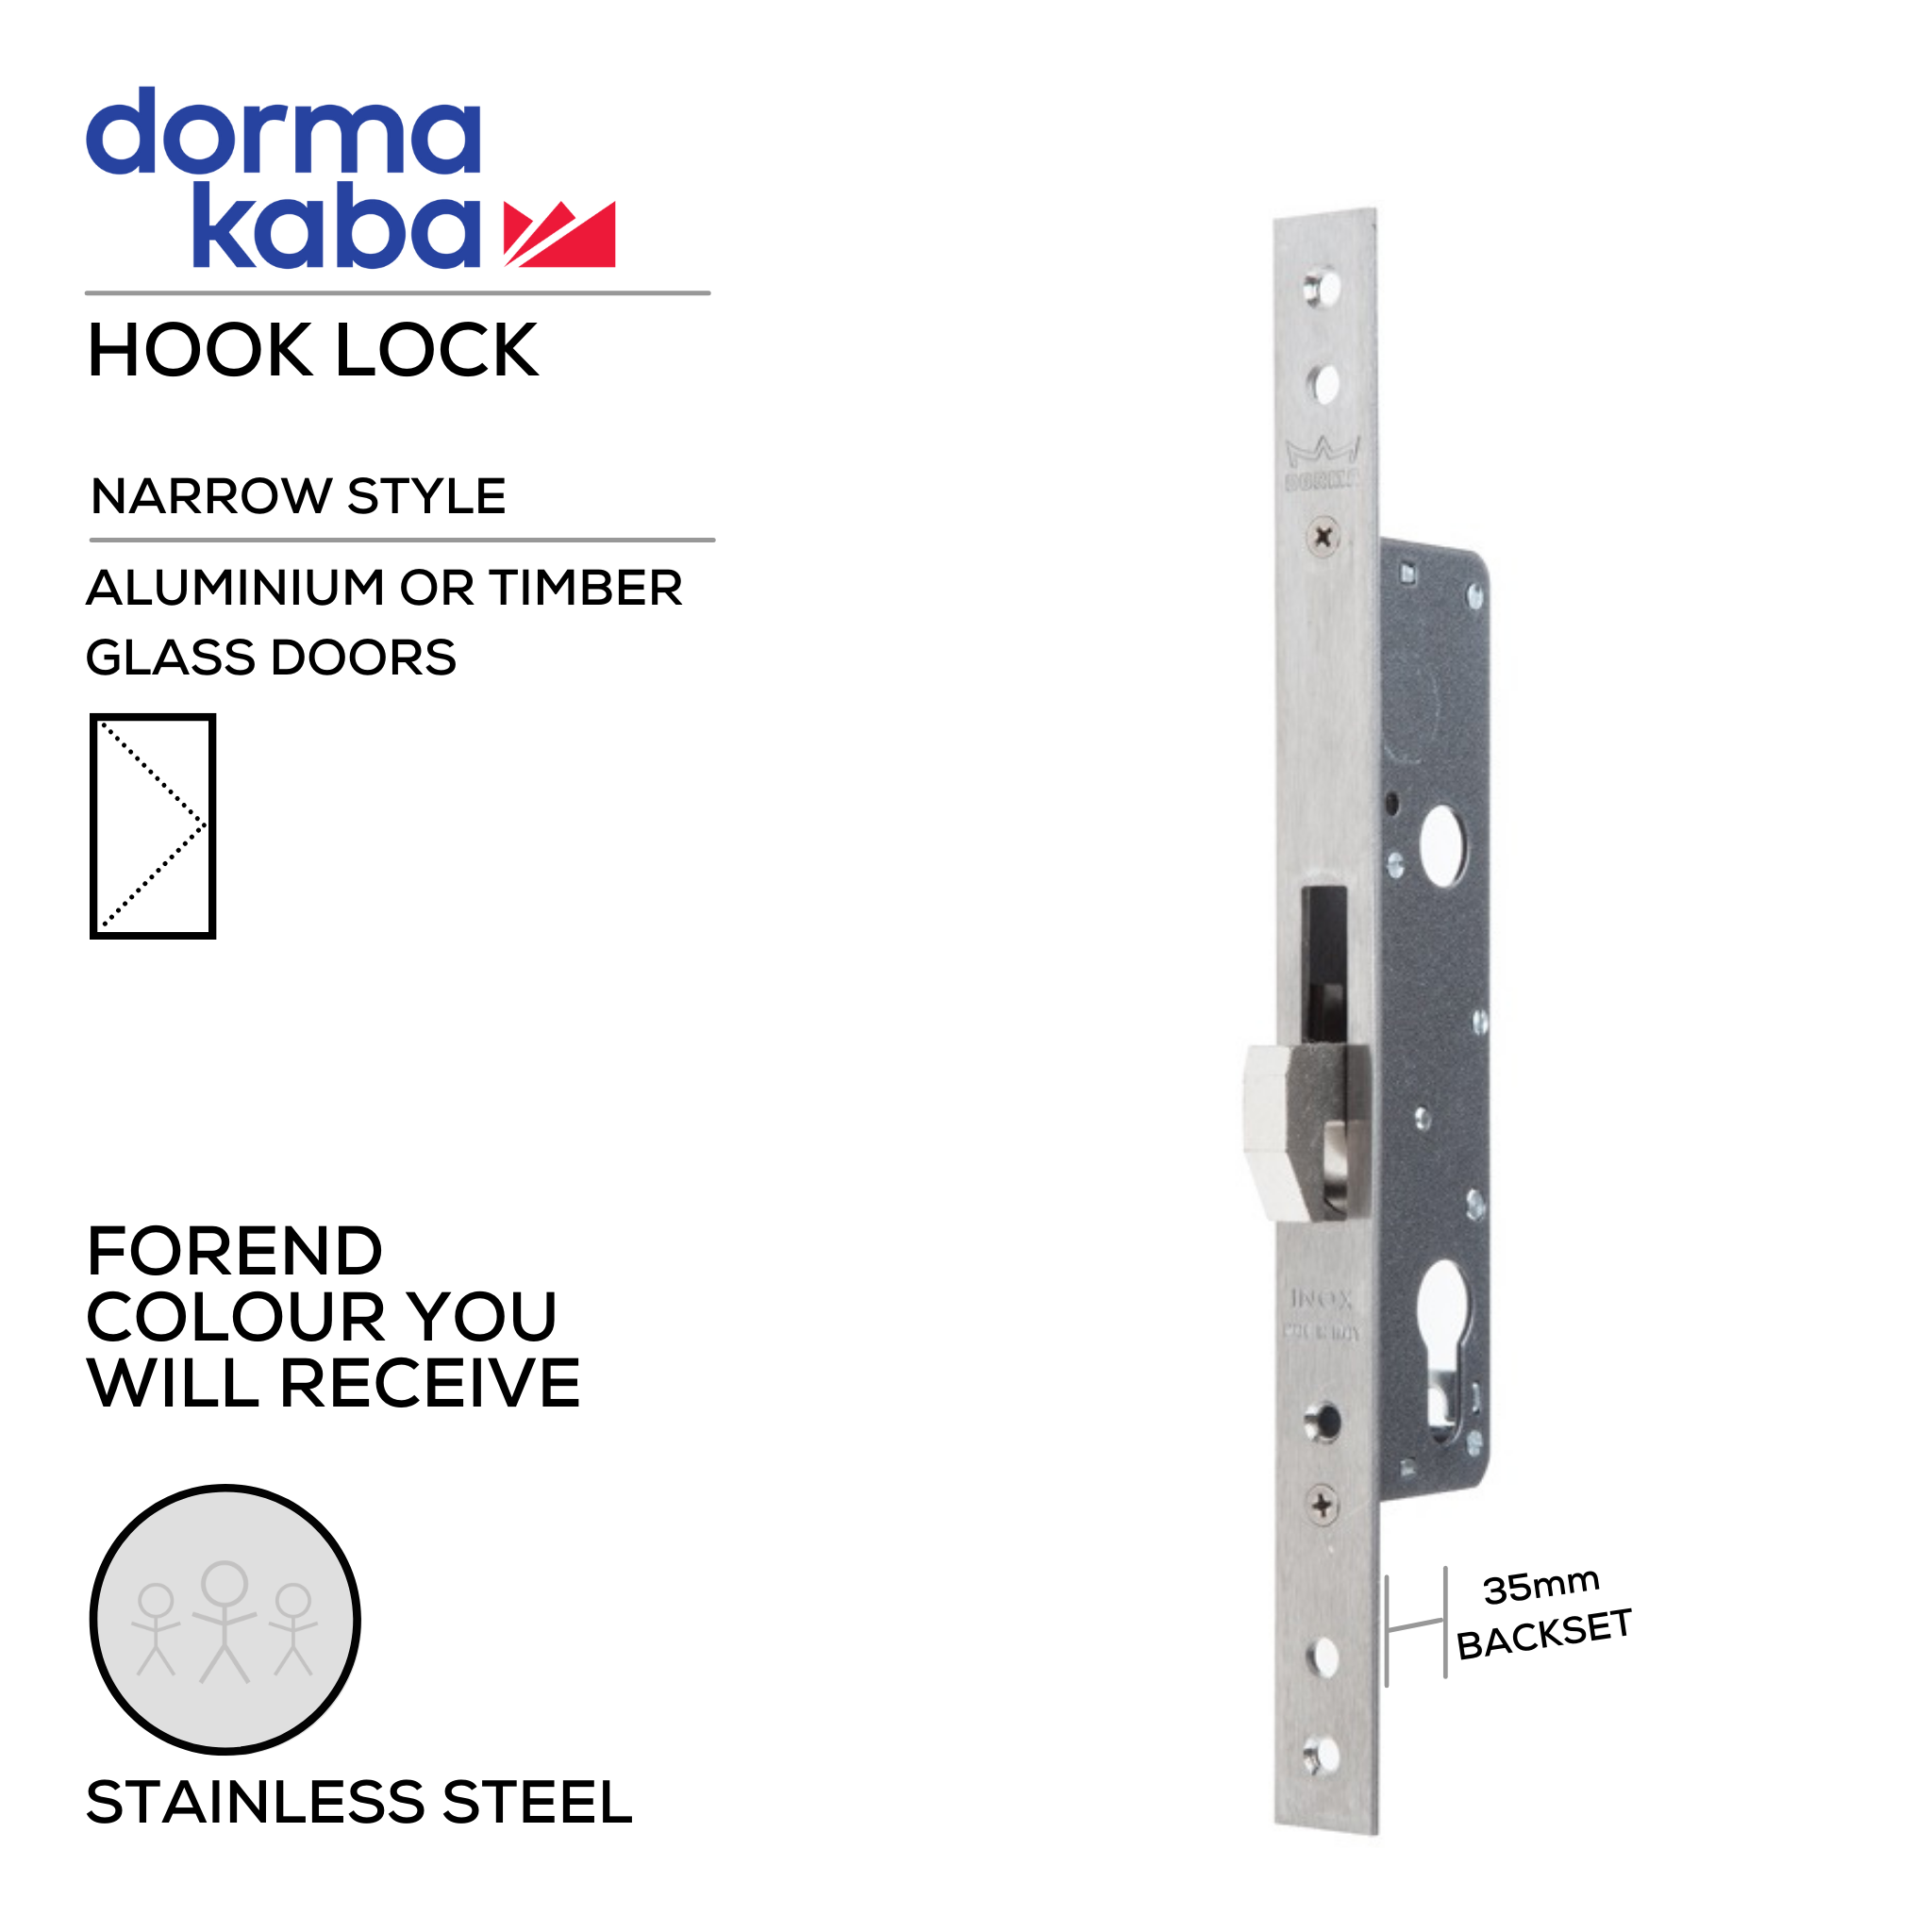 D02935 35, Narrow Style, Hook Lock, Euro Cylinder, Excluding Cylinder, 35mm (Backset), Stainless Steel, DORMAKABA